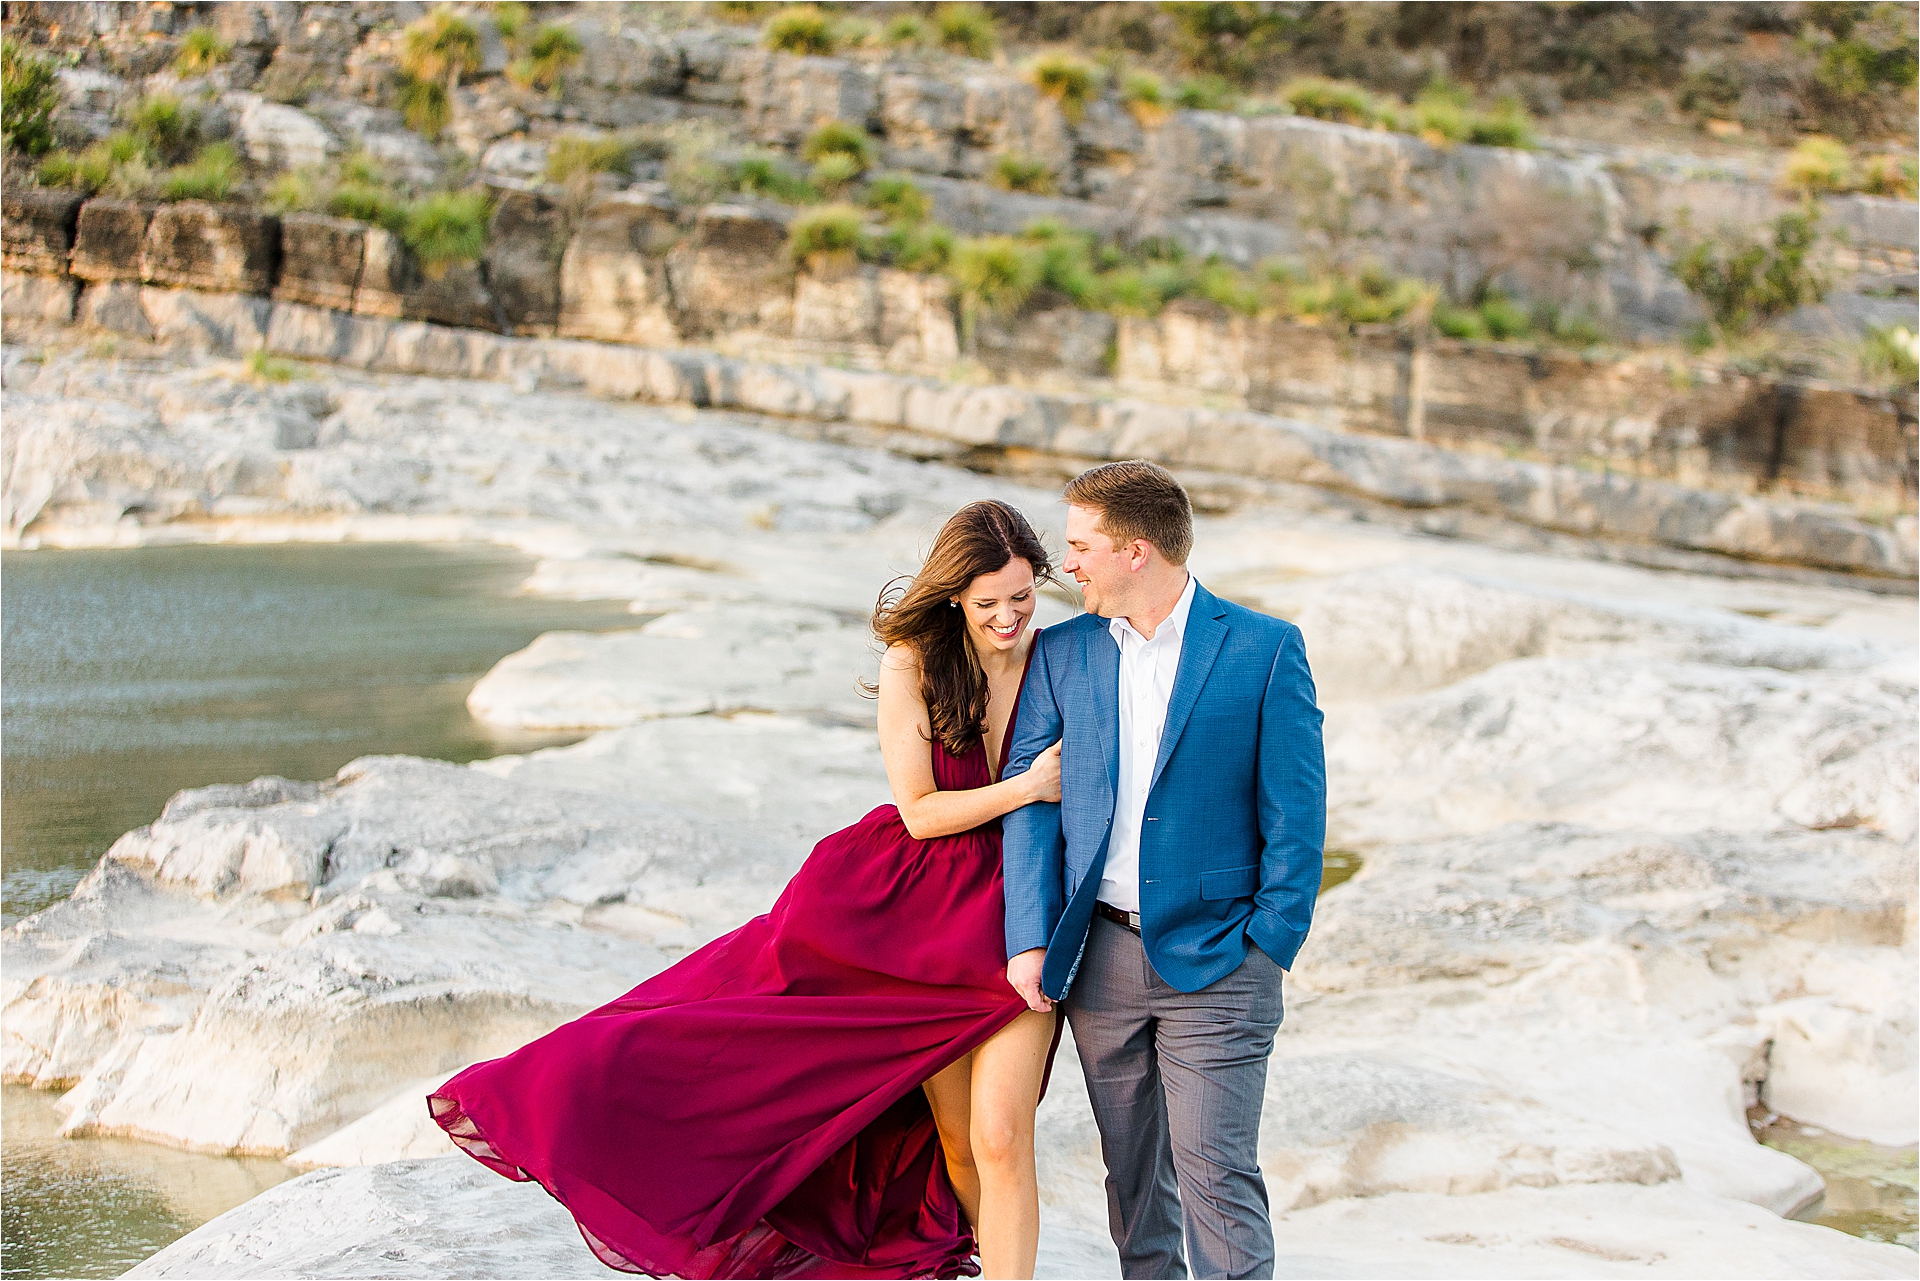 Best Austin Texas Outdoor Engagement Locations | Pedernales Falls State Park